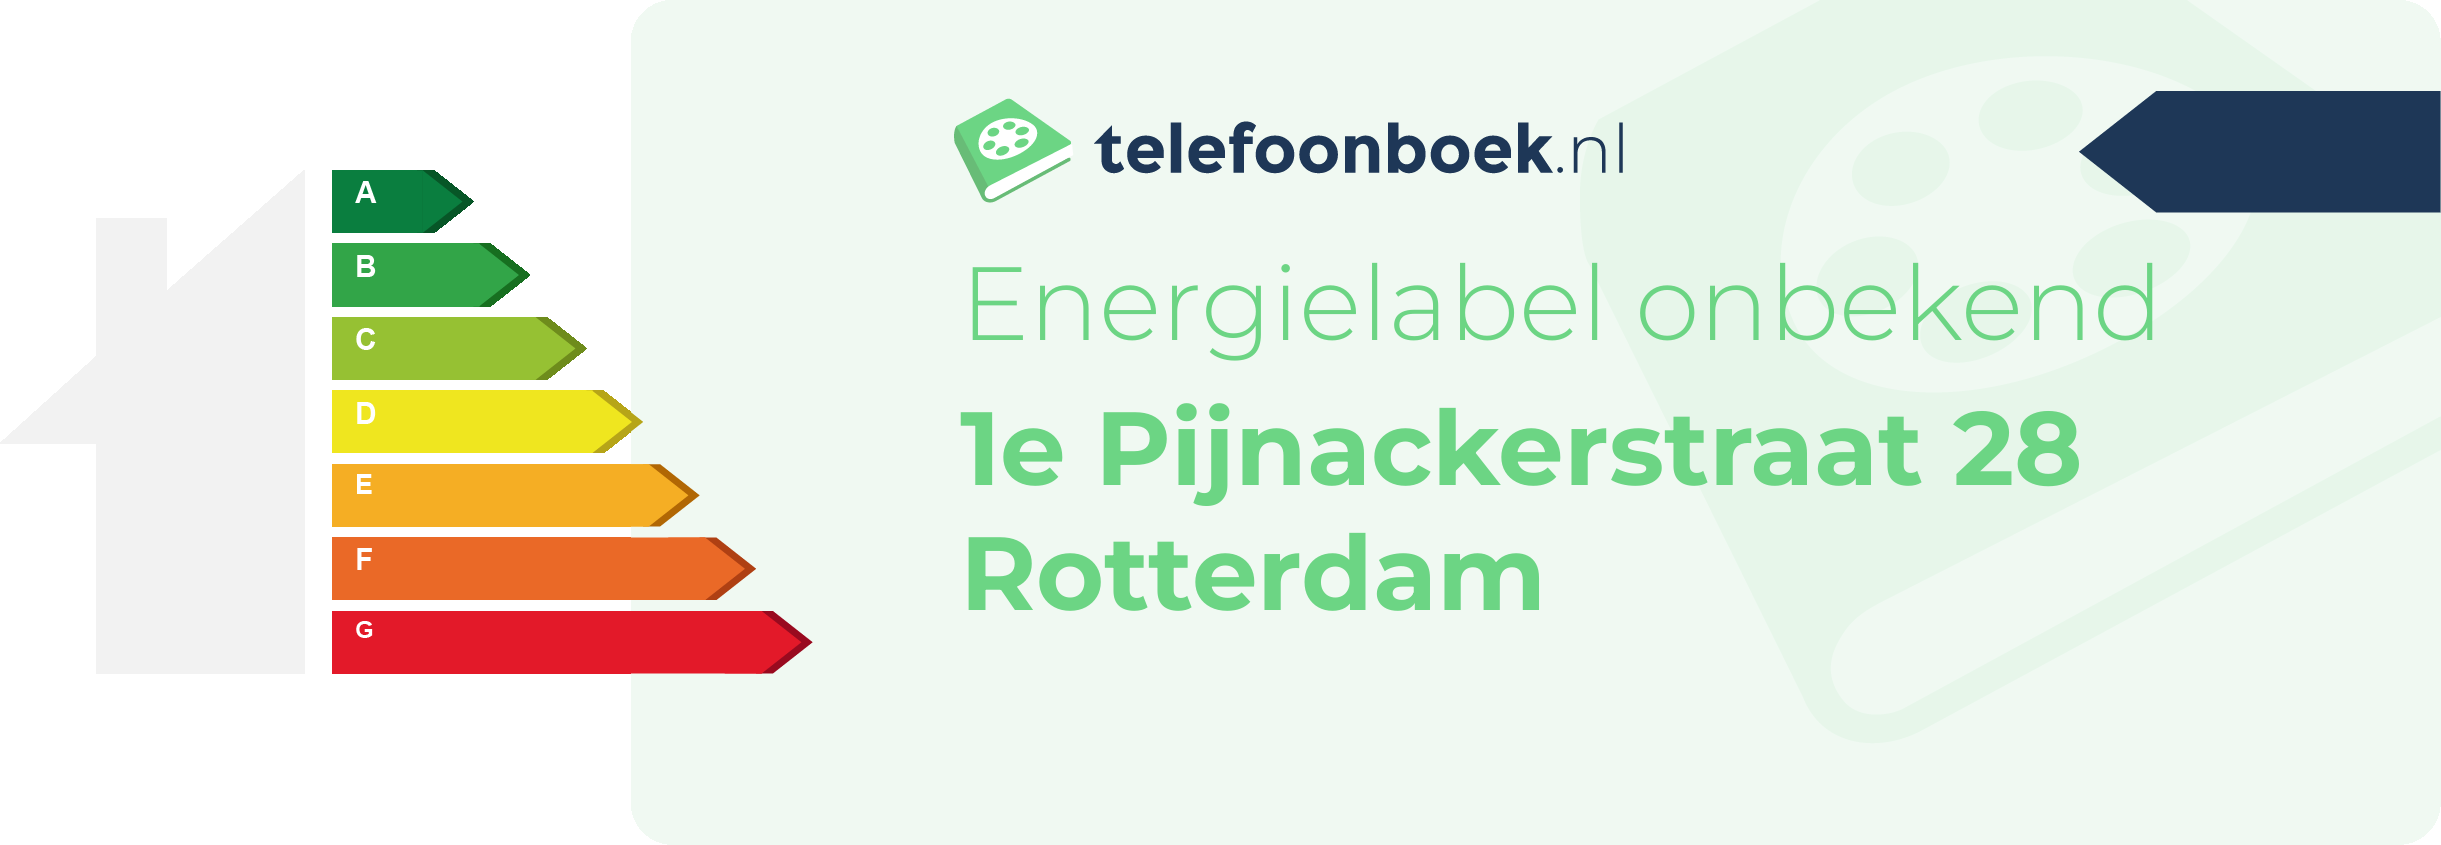 Energielabel 1e Pijnackerstraat 28 Rotterdam